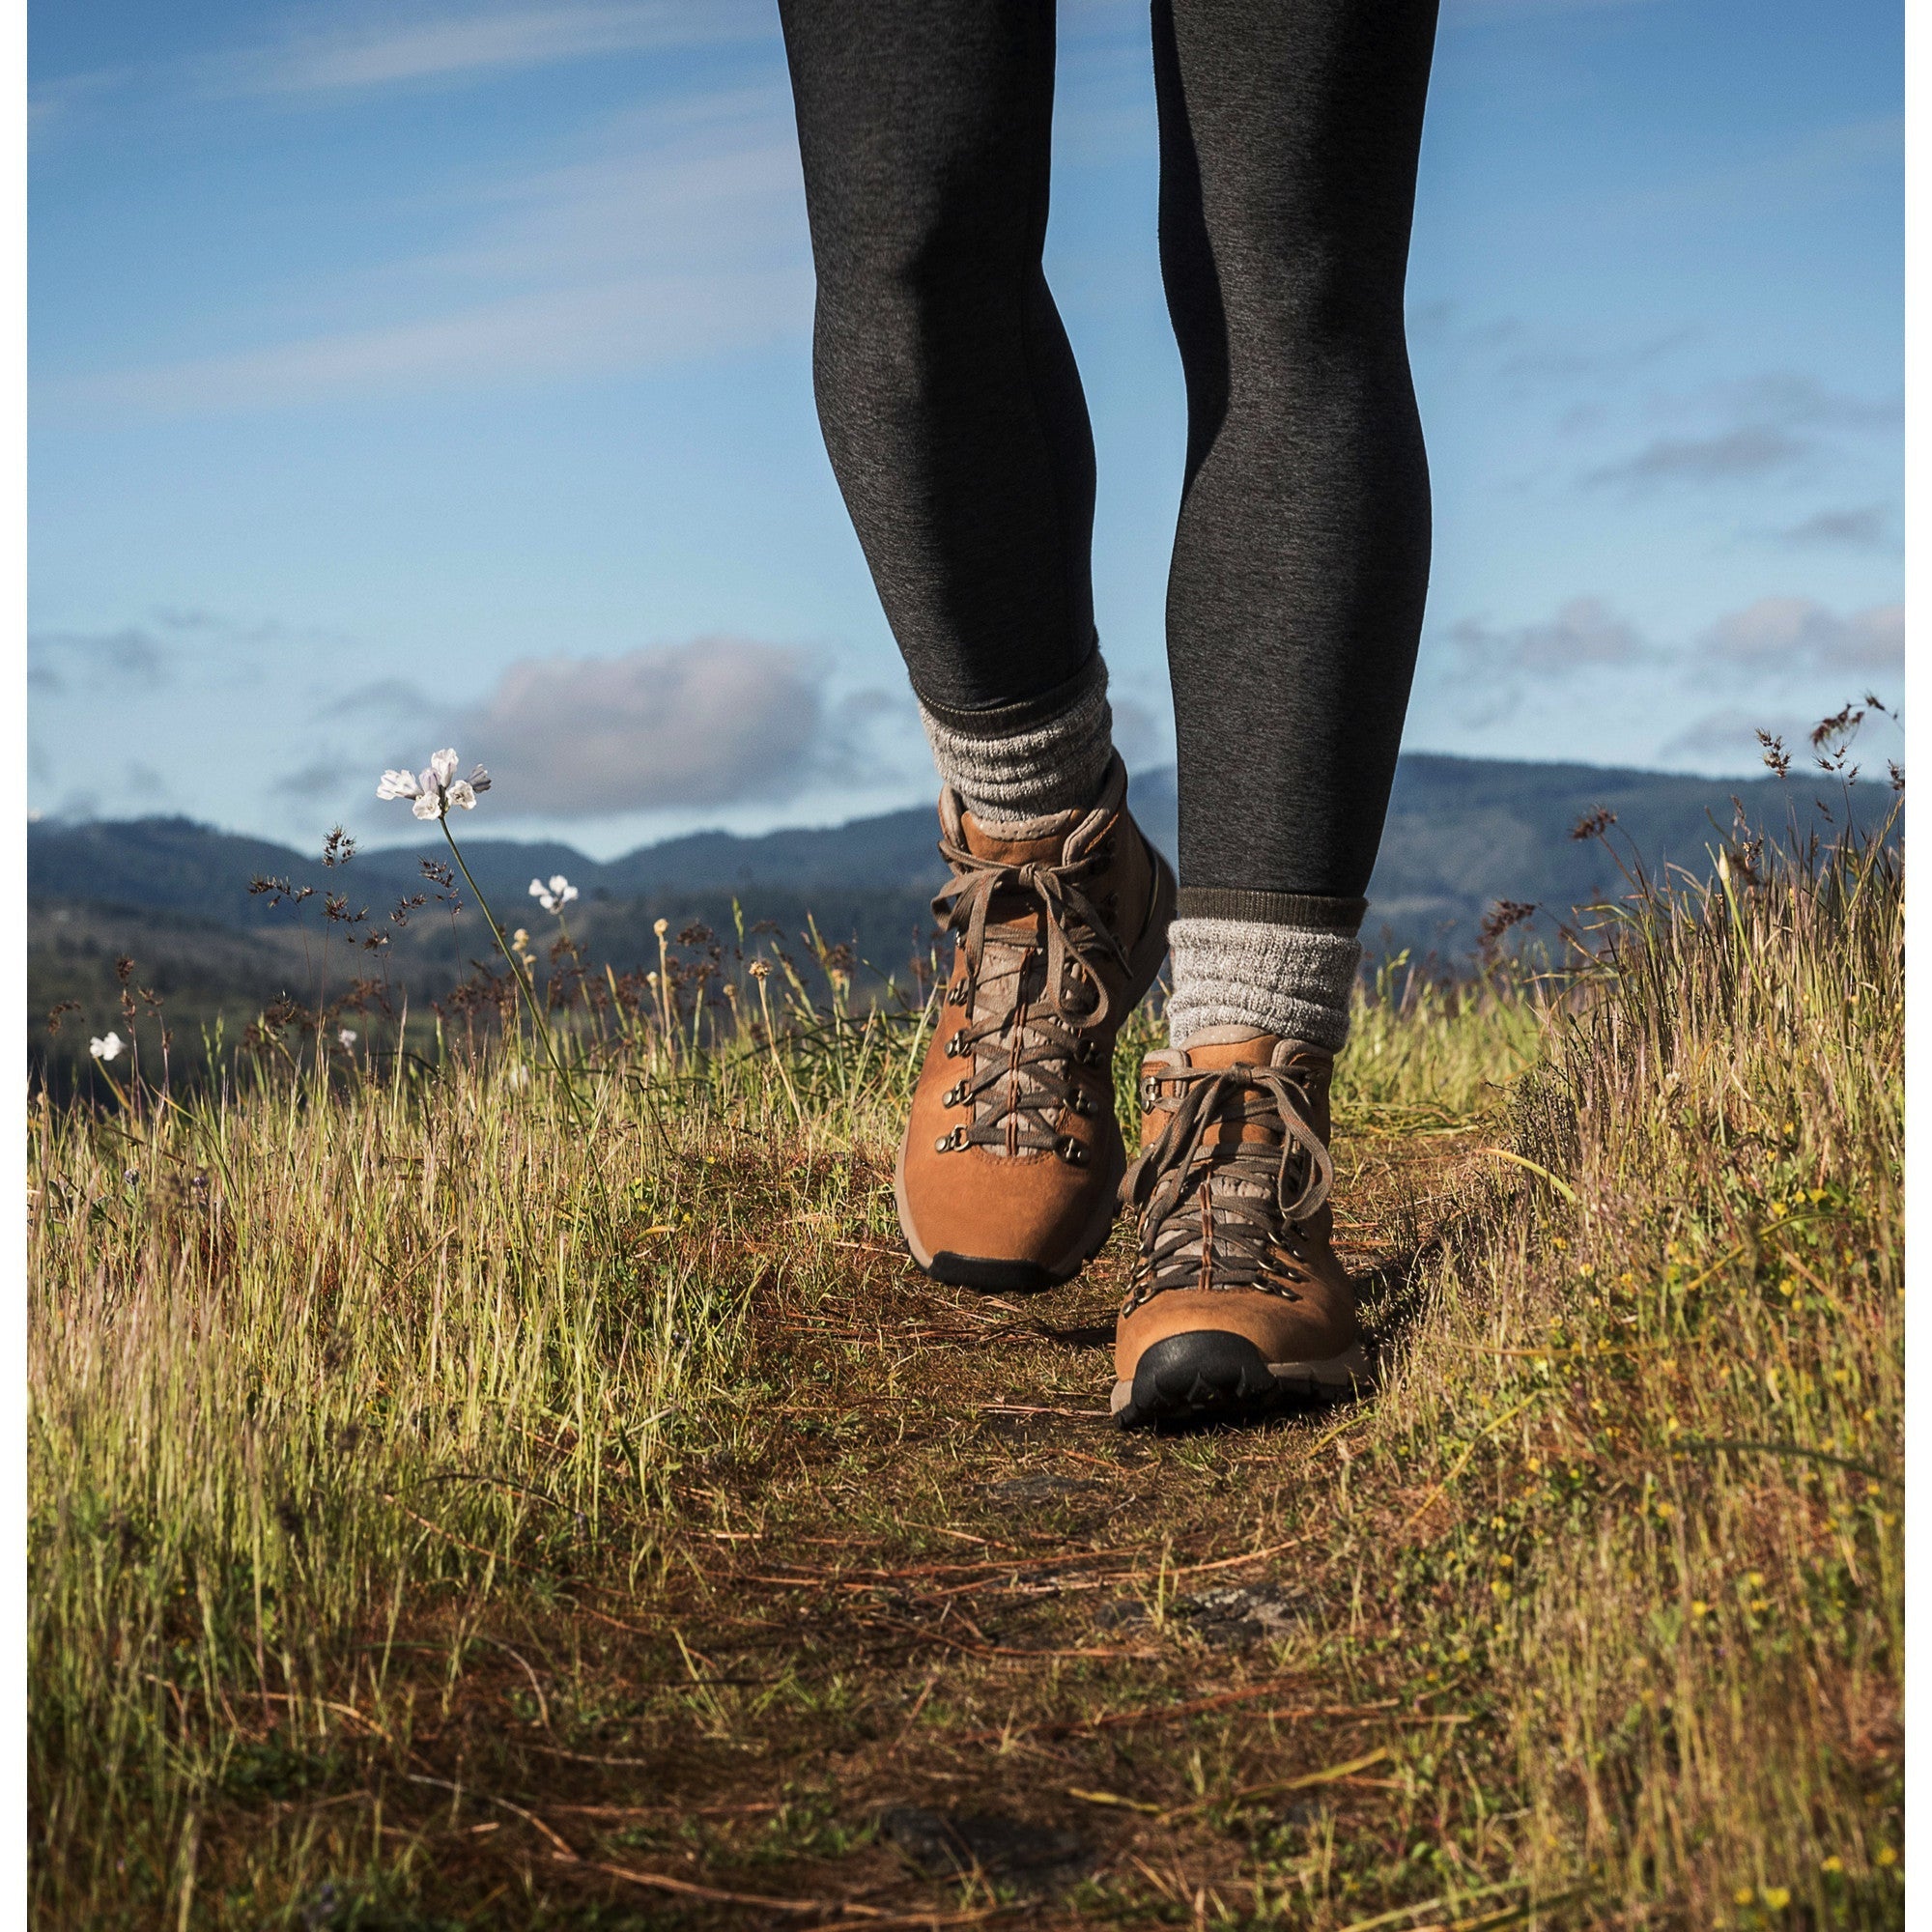 Danner Women's Mountain 600 4.5 WP Hiking Boot - Brown - 62251